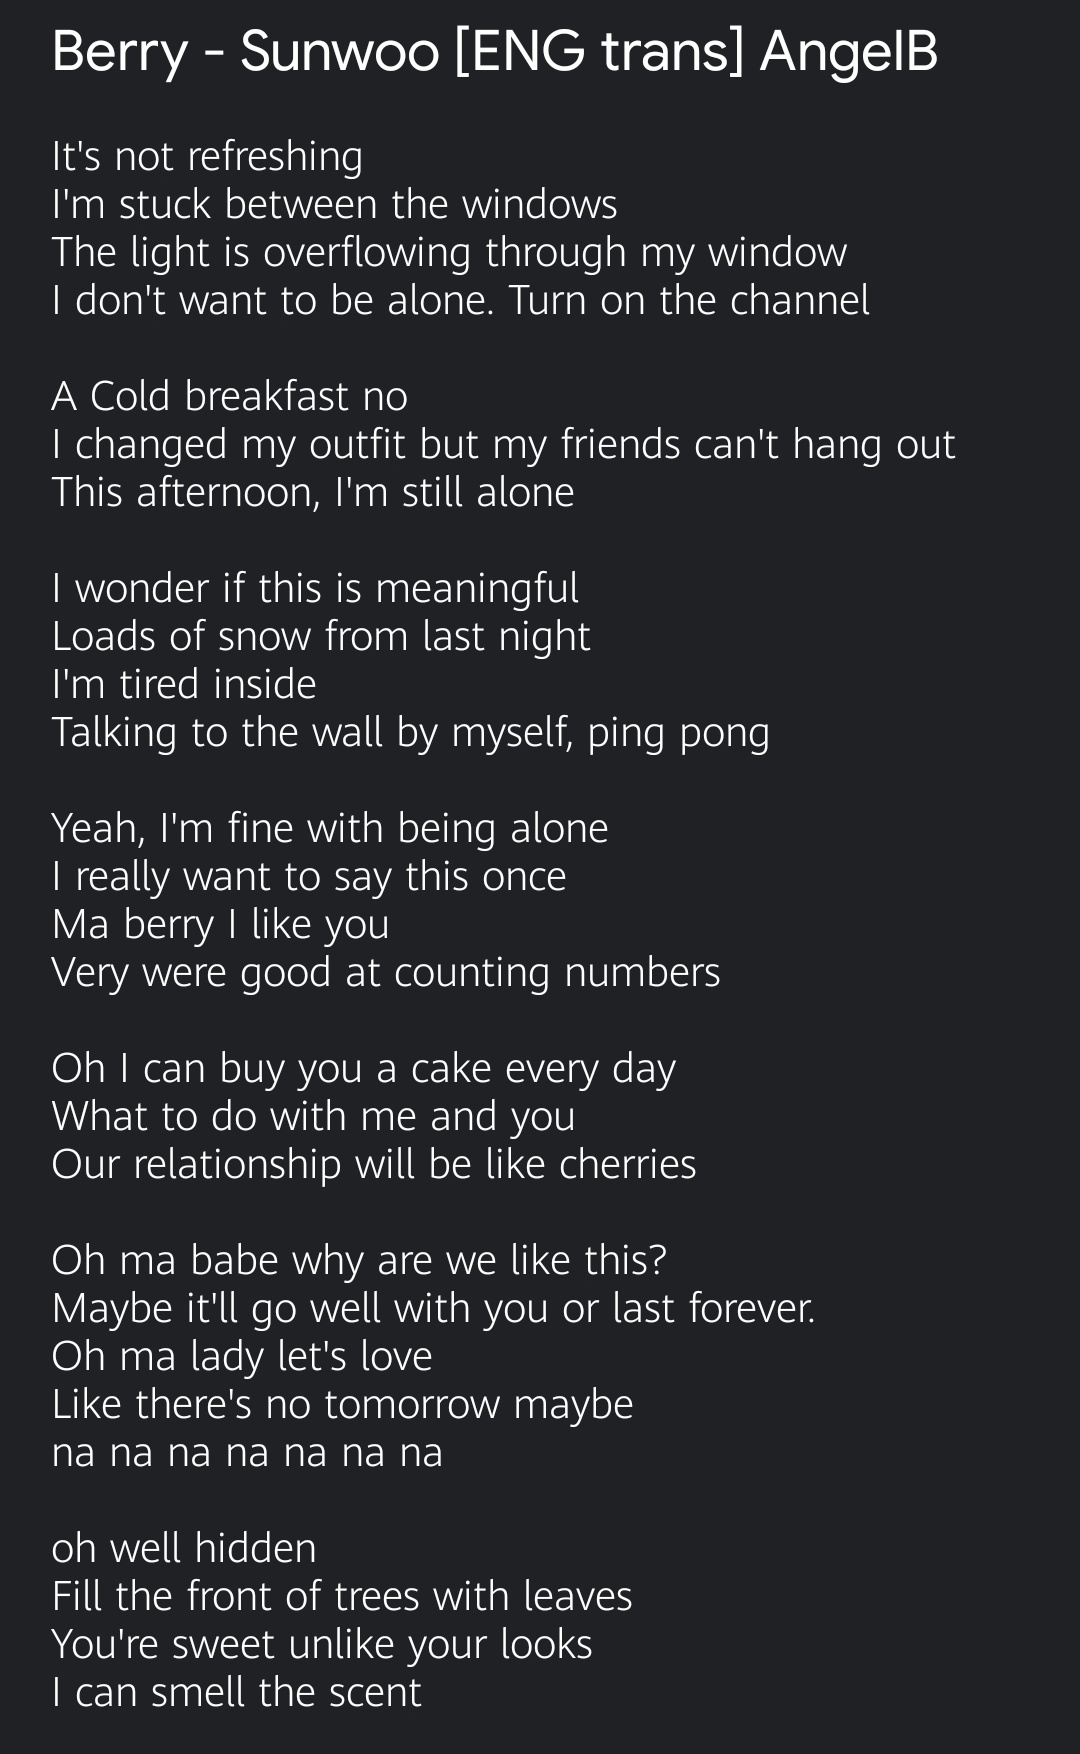 sloww노랑 on X: 'Eternal sunshine' lyrics (trans.) - song that